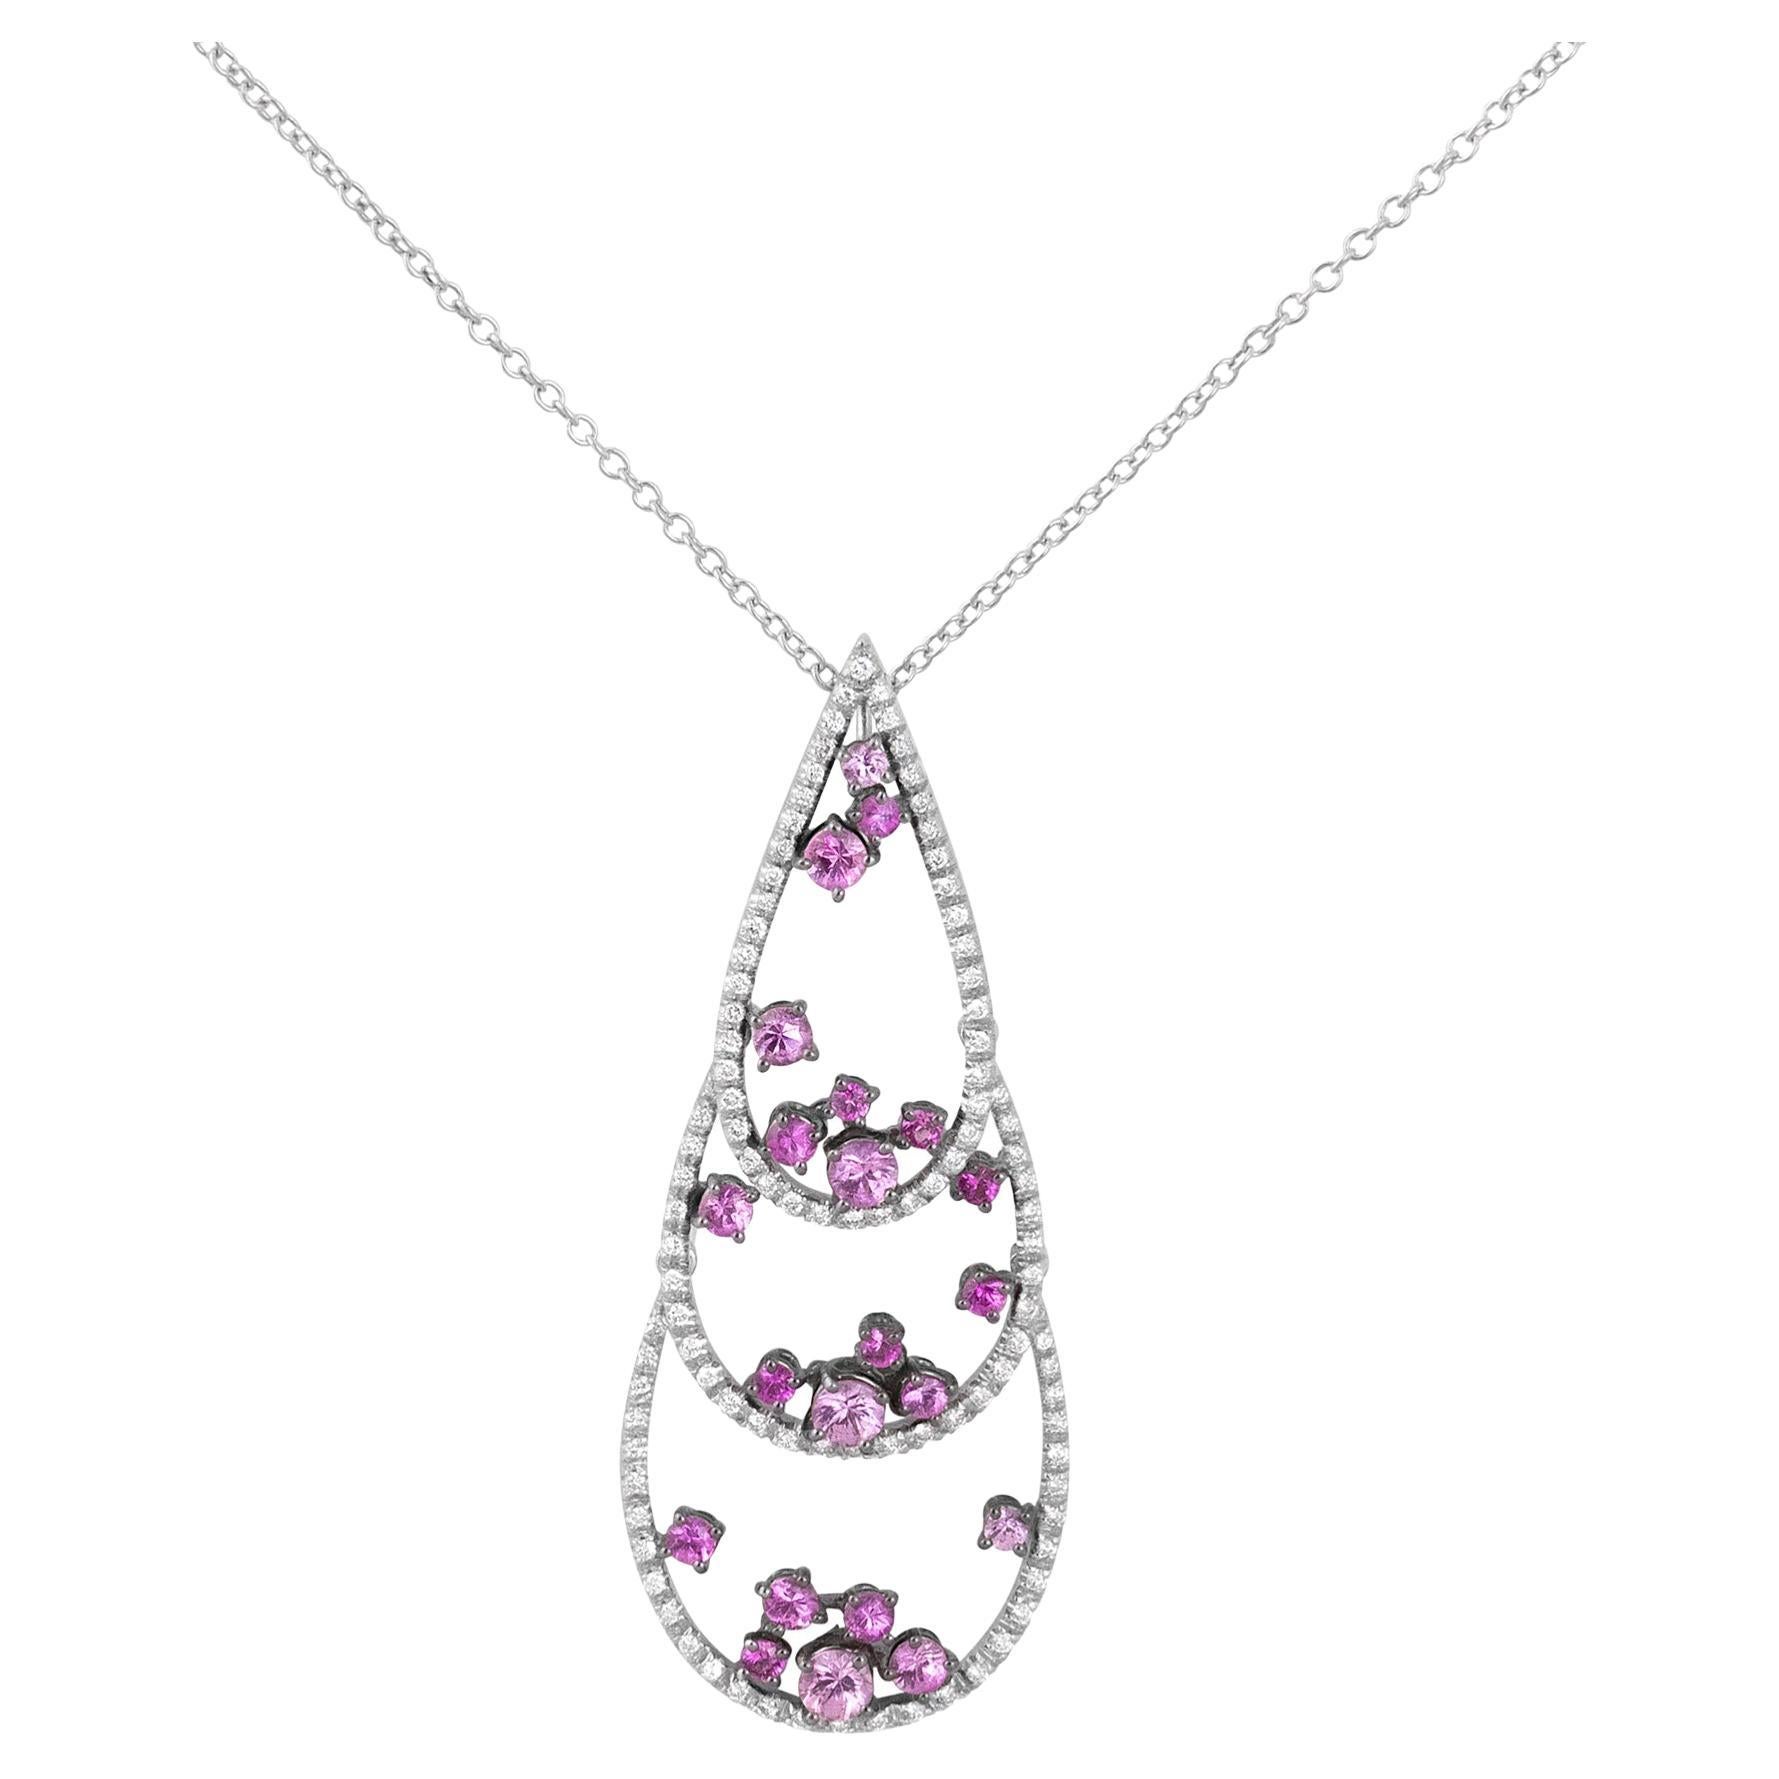 IO SI 18K White Gold Diamond & Pink Sapphire Necklace